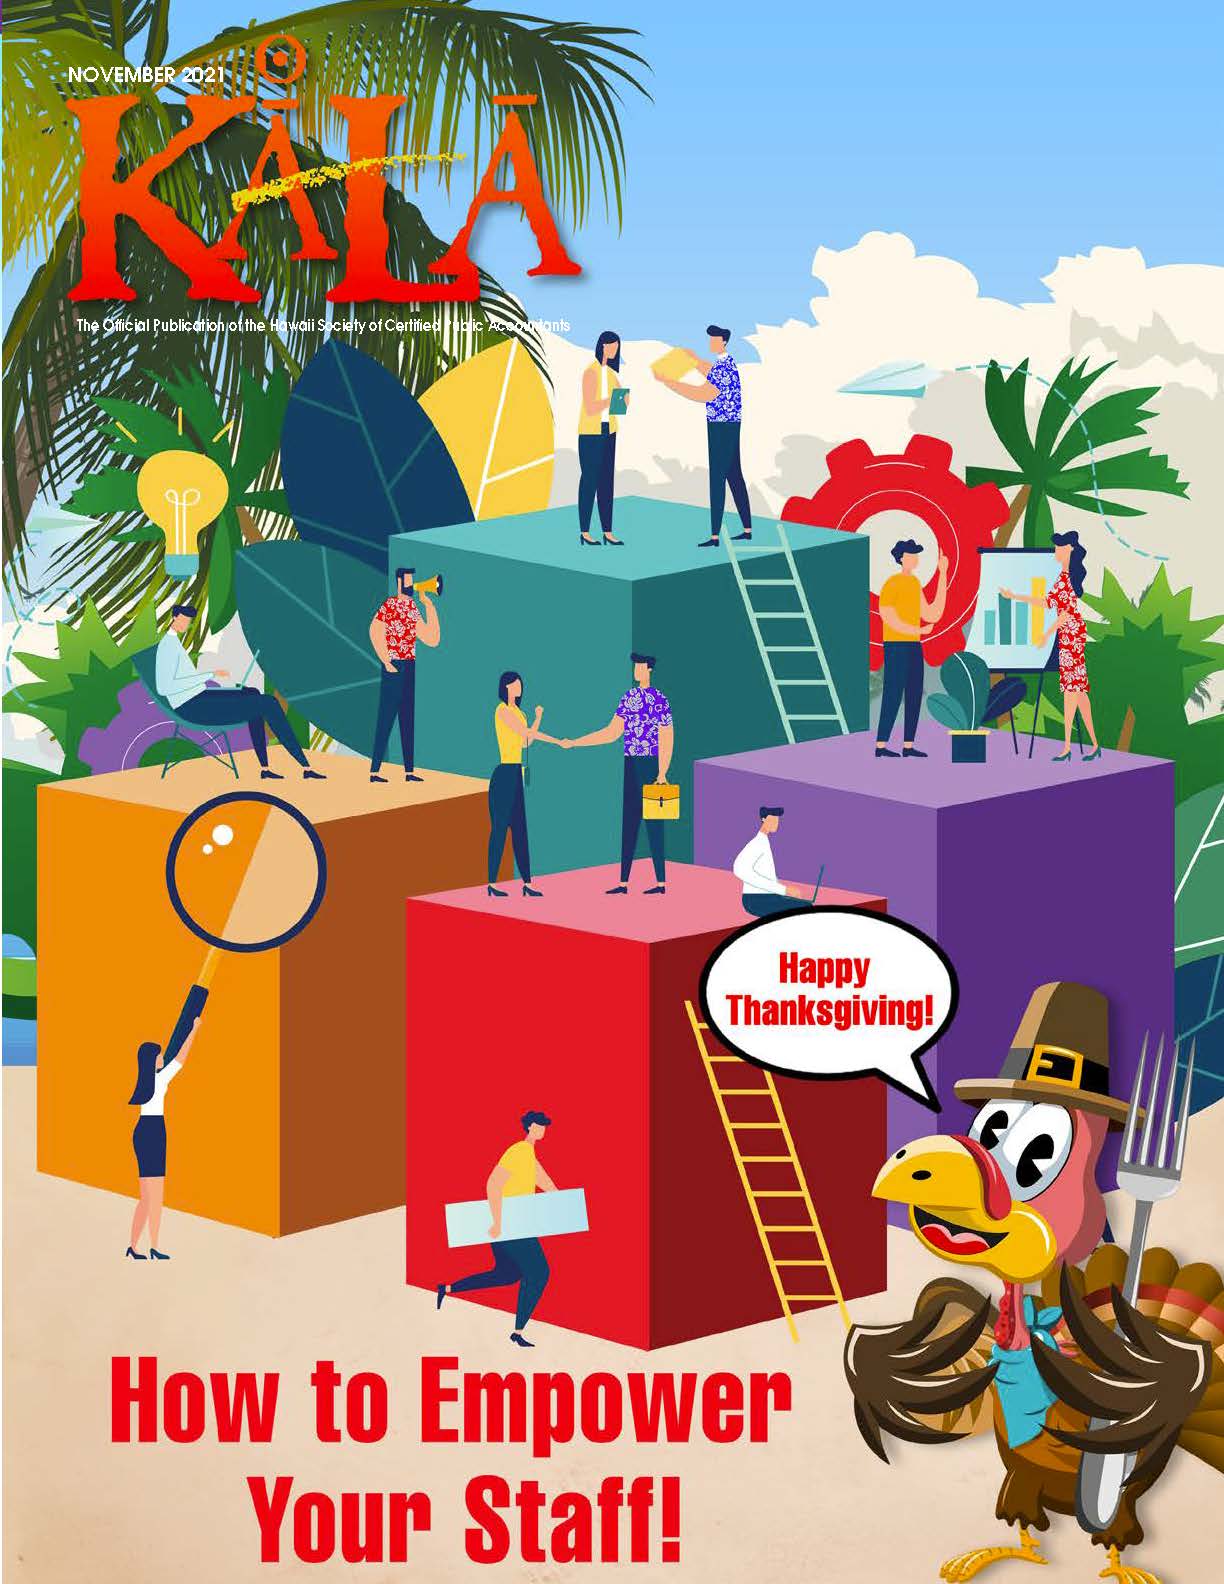 Magazine cover image